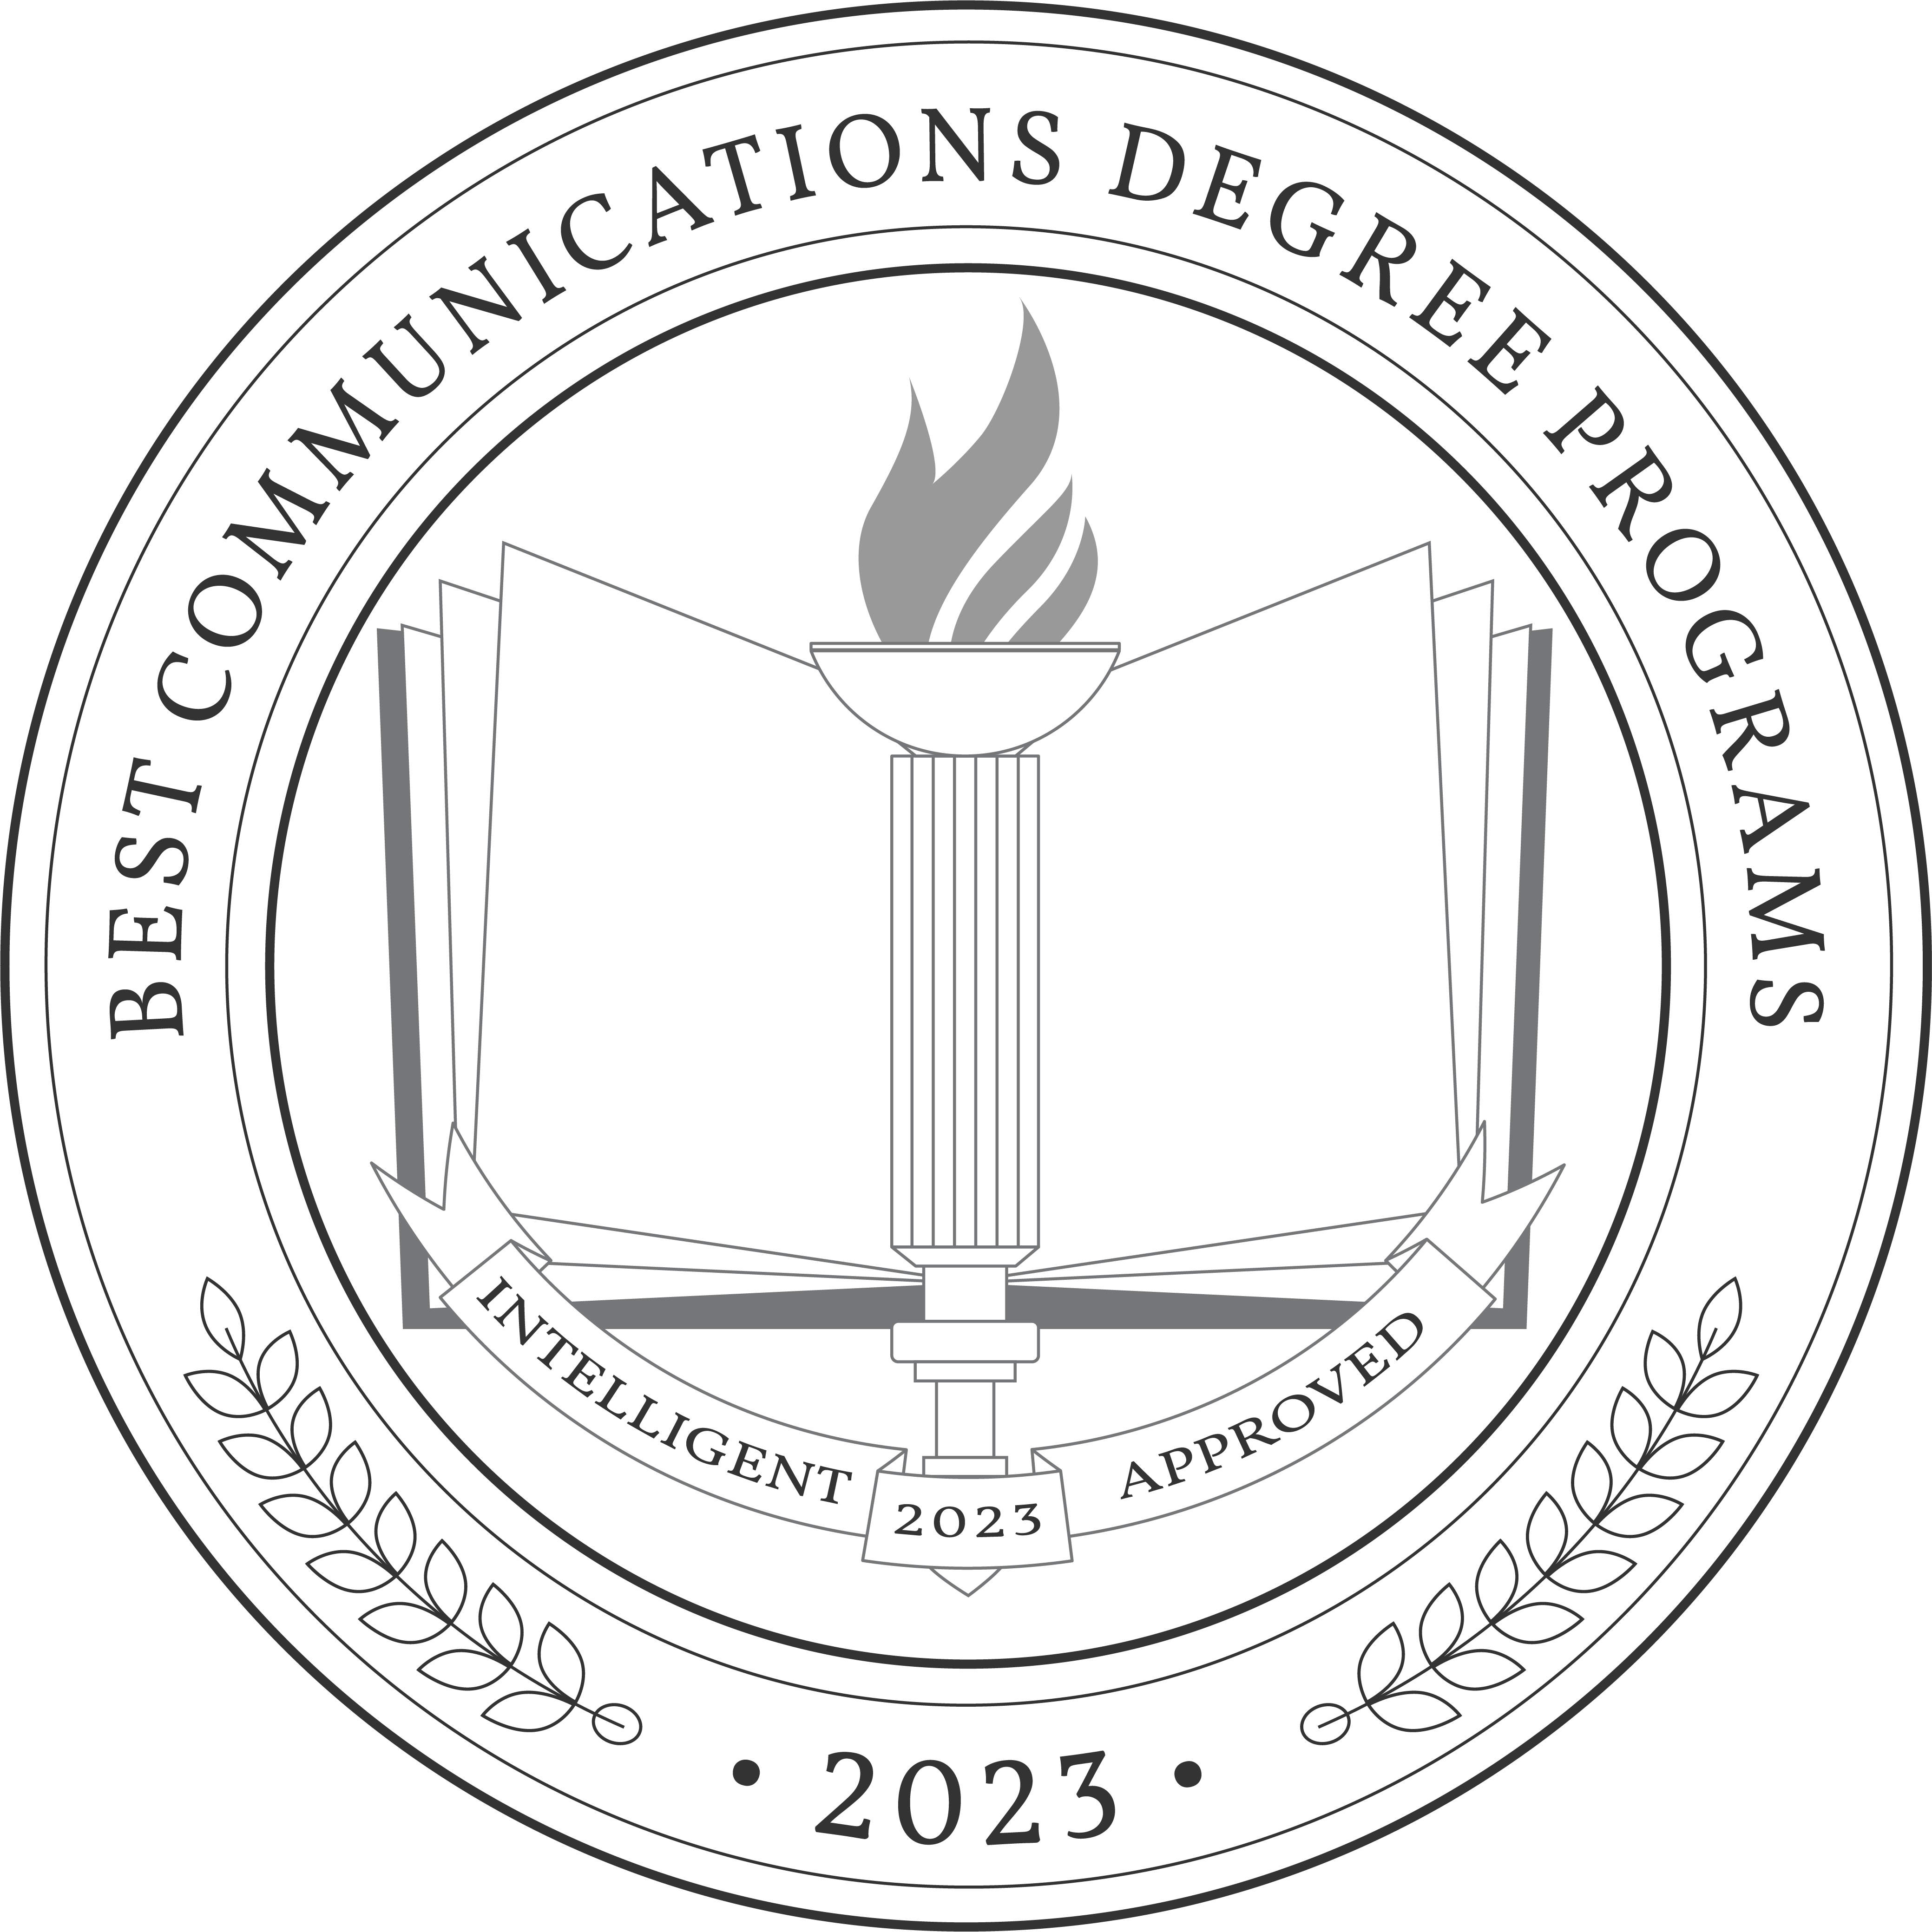 Best Communications Degree Programs 2023